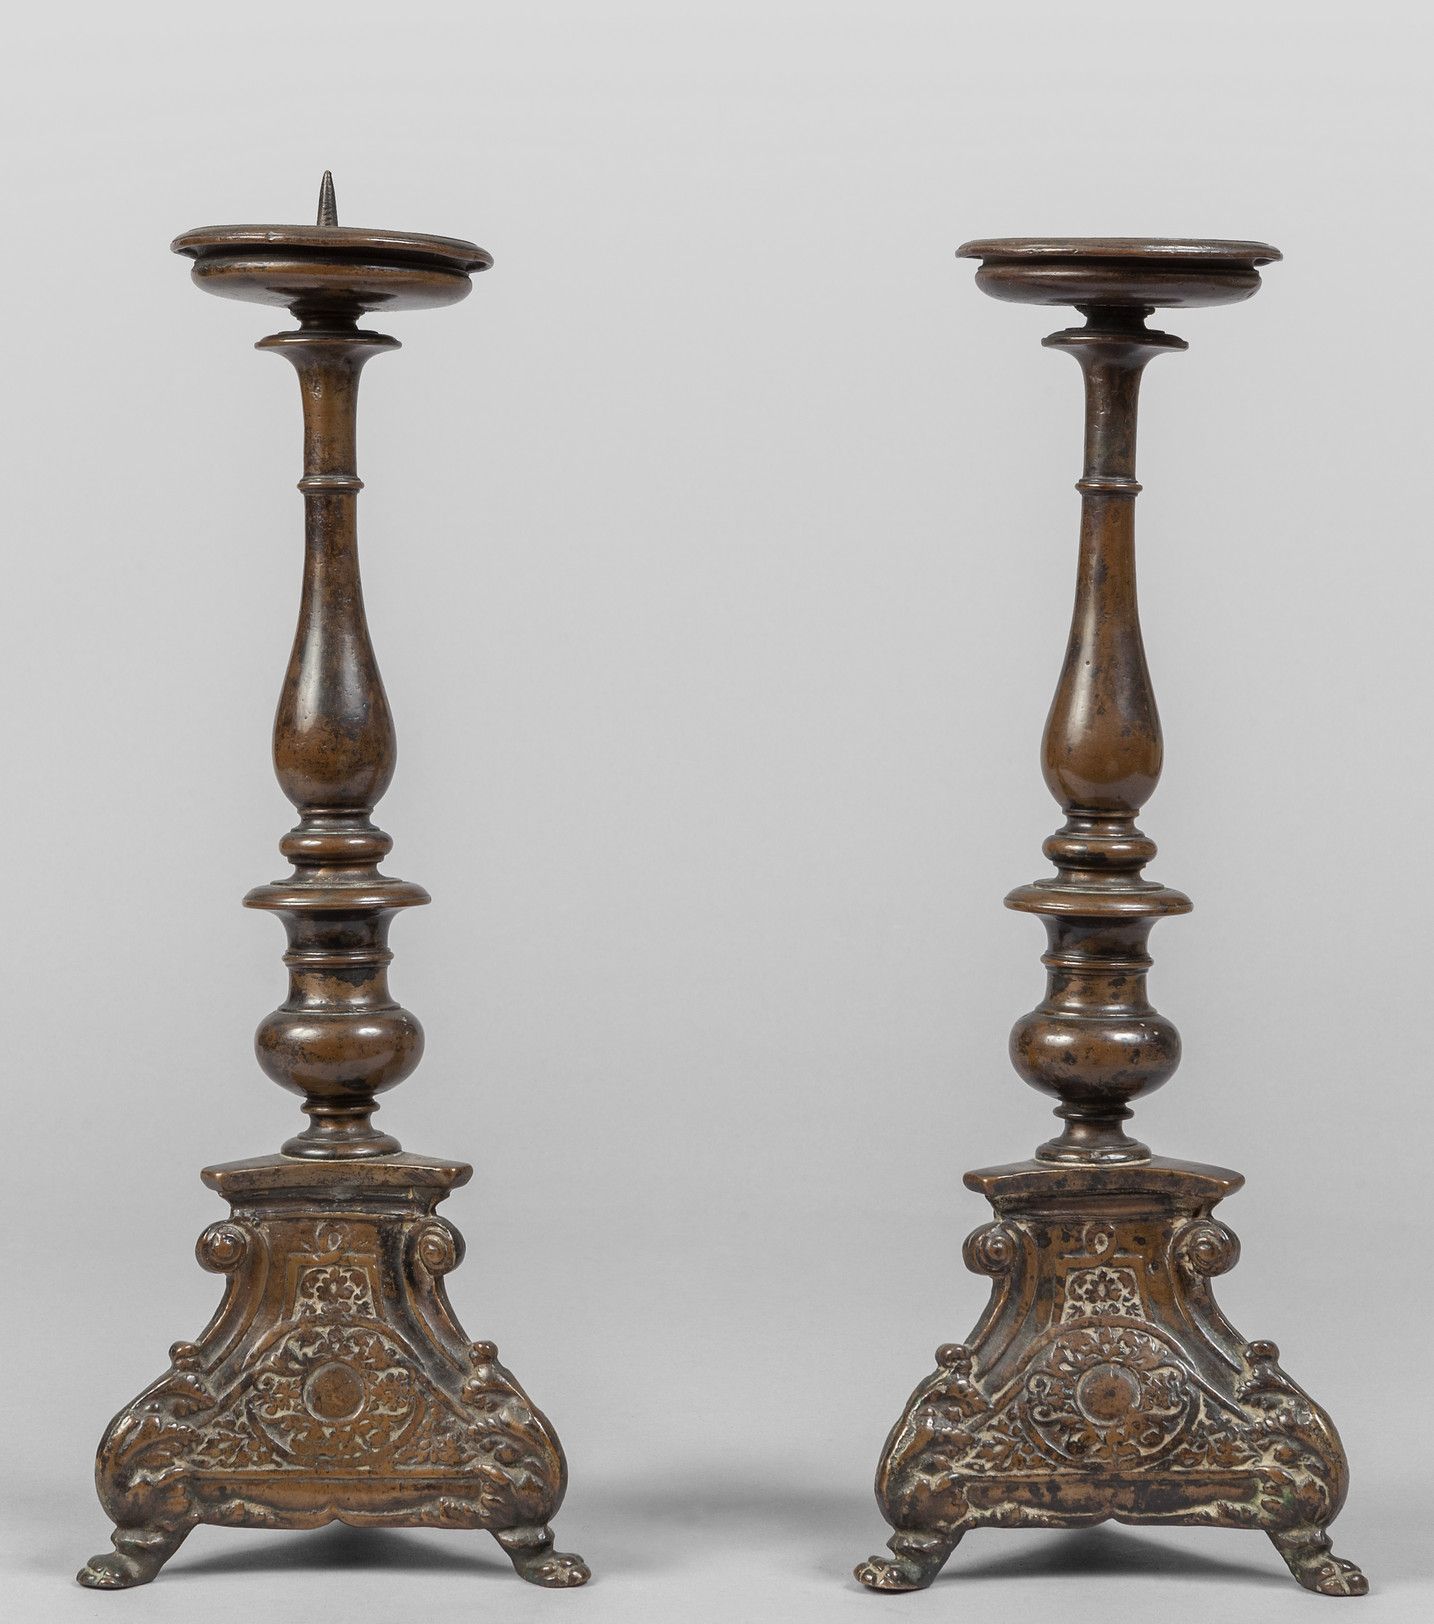 Coppia di candelieri in bronzo a patina scura, 一对青铜烛台，有深色的铜锈，底座有野性的脚，托斯卡纳 17世纪
h&hellip;